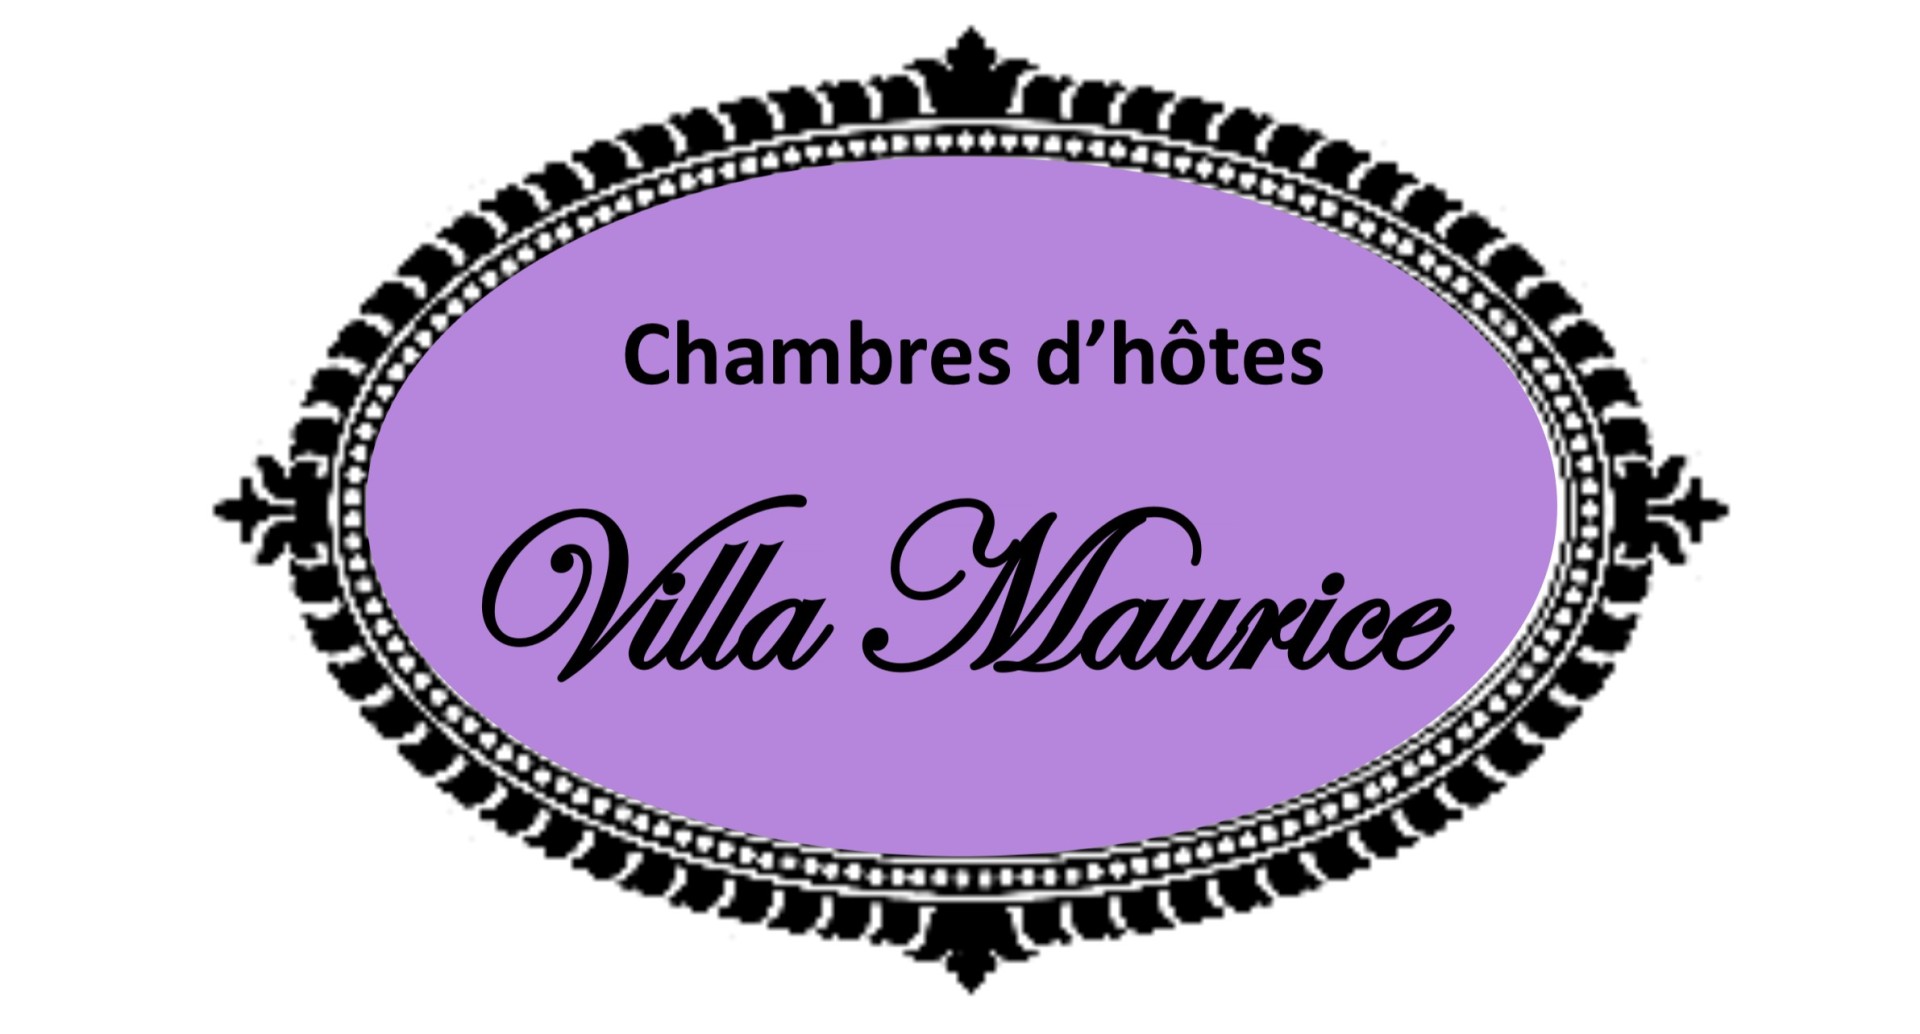 Chambres d'hôtes Villa Maurice